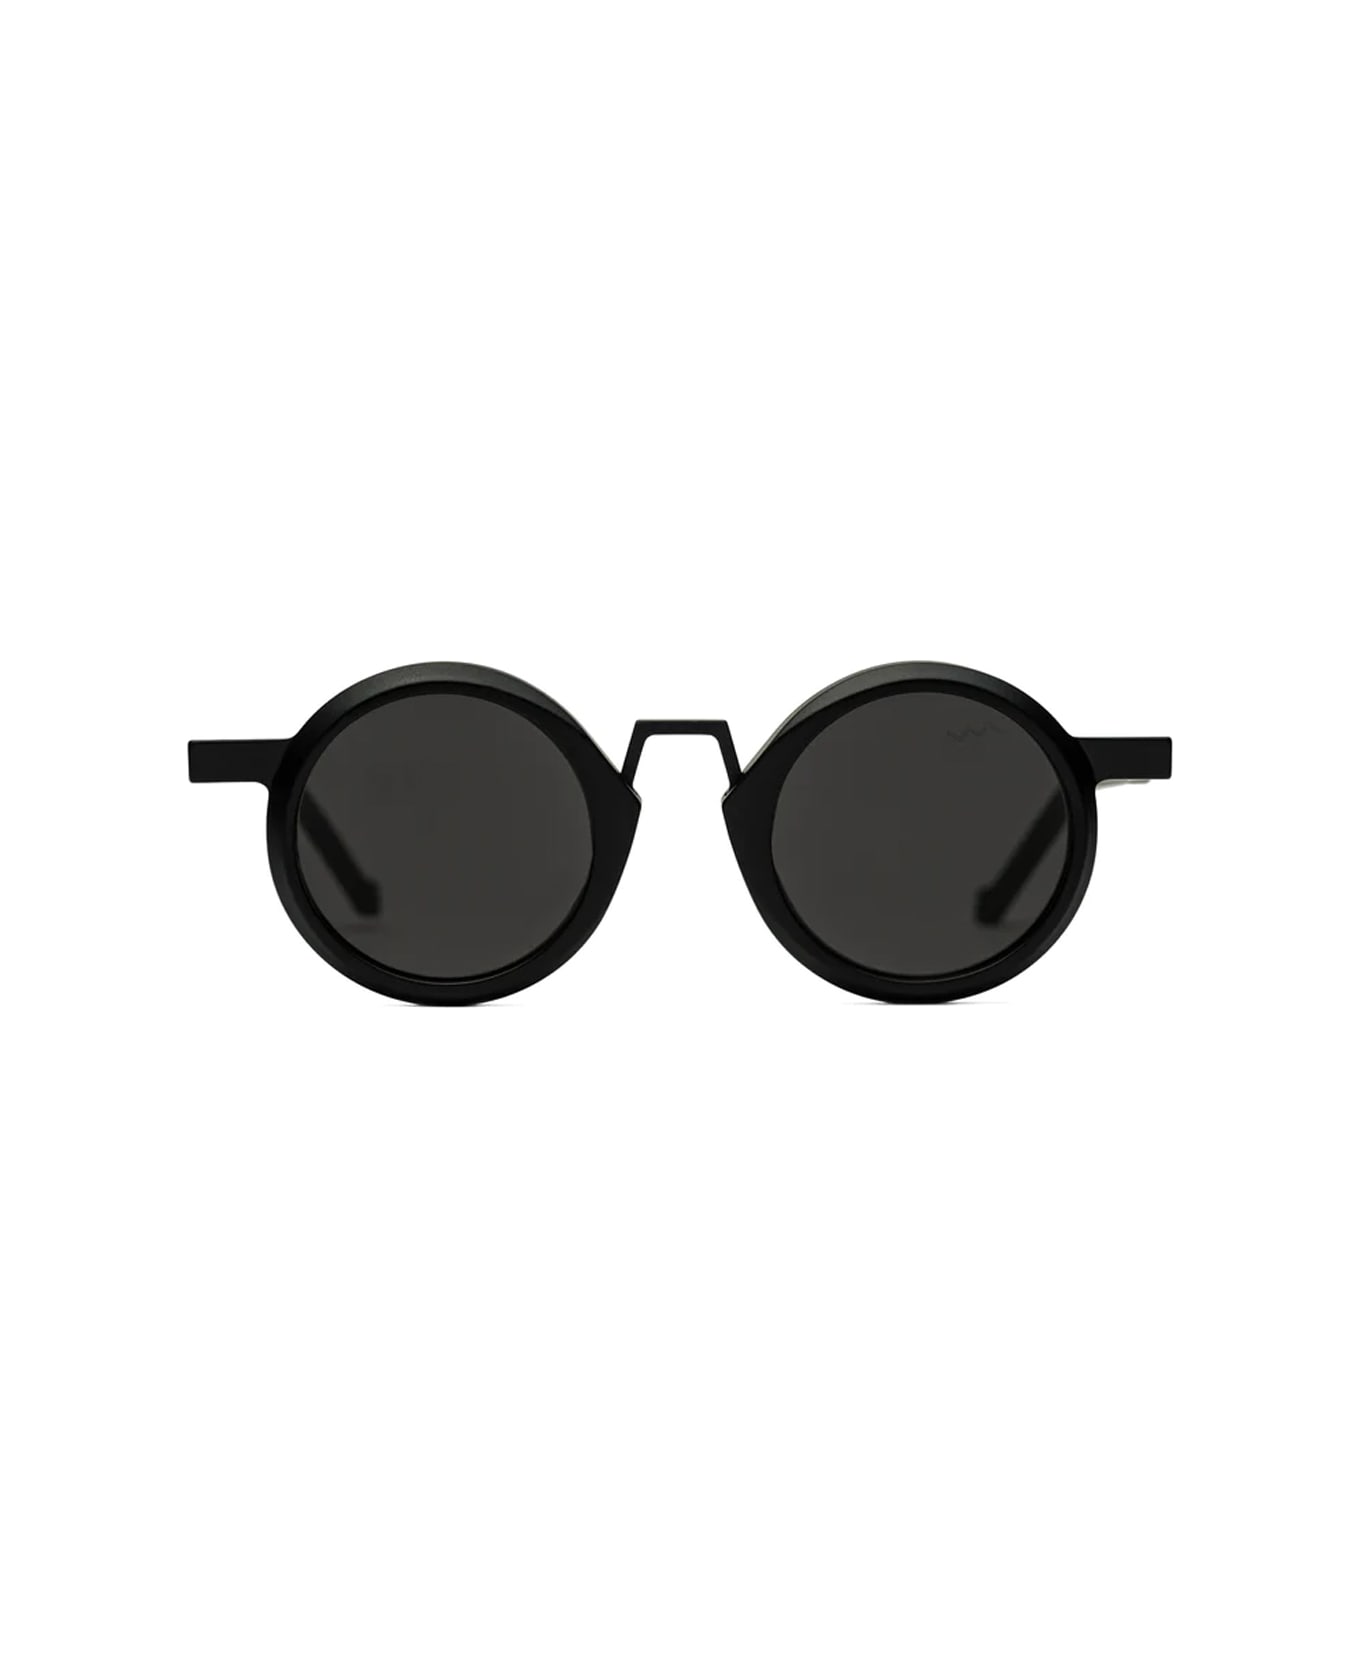 VAVA Wl0044 Black Sunglasses - Nero サングラス